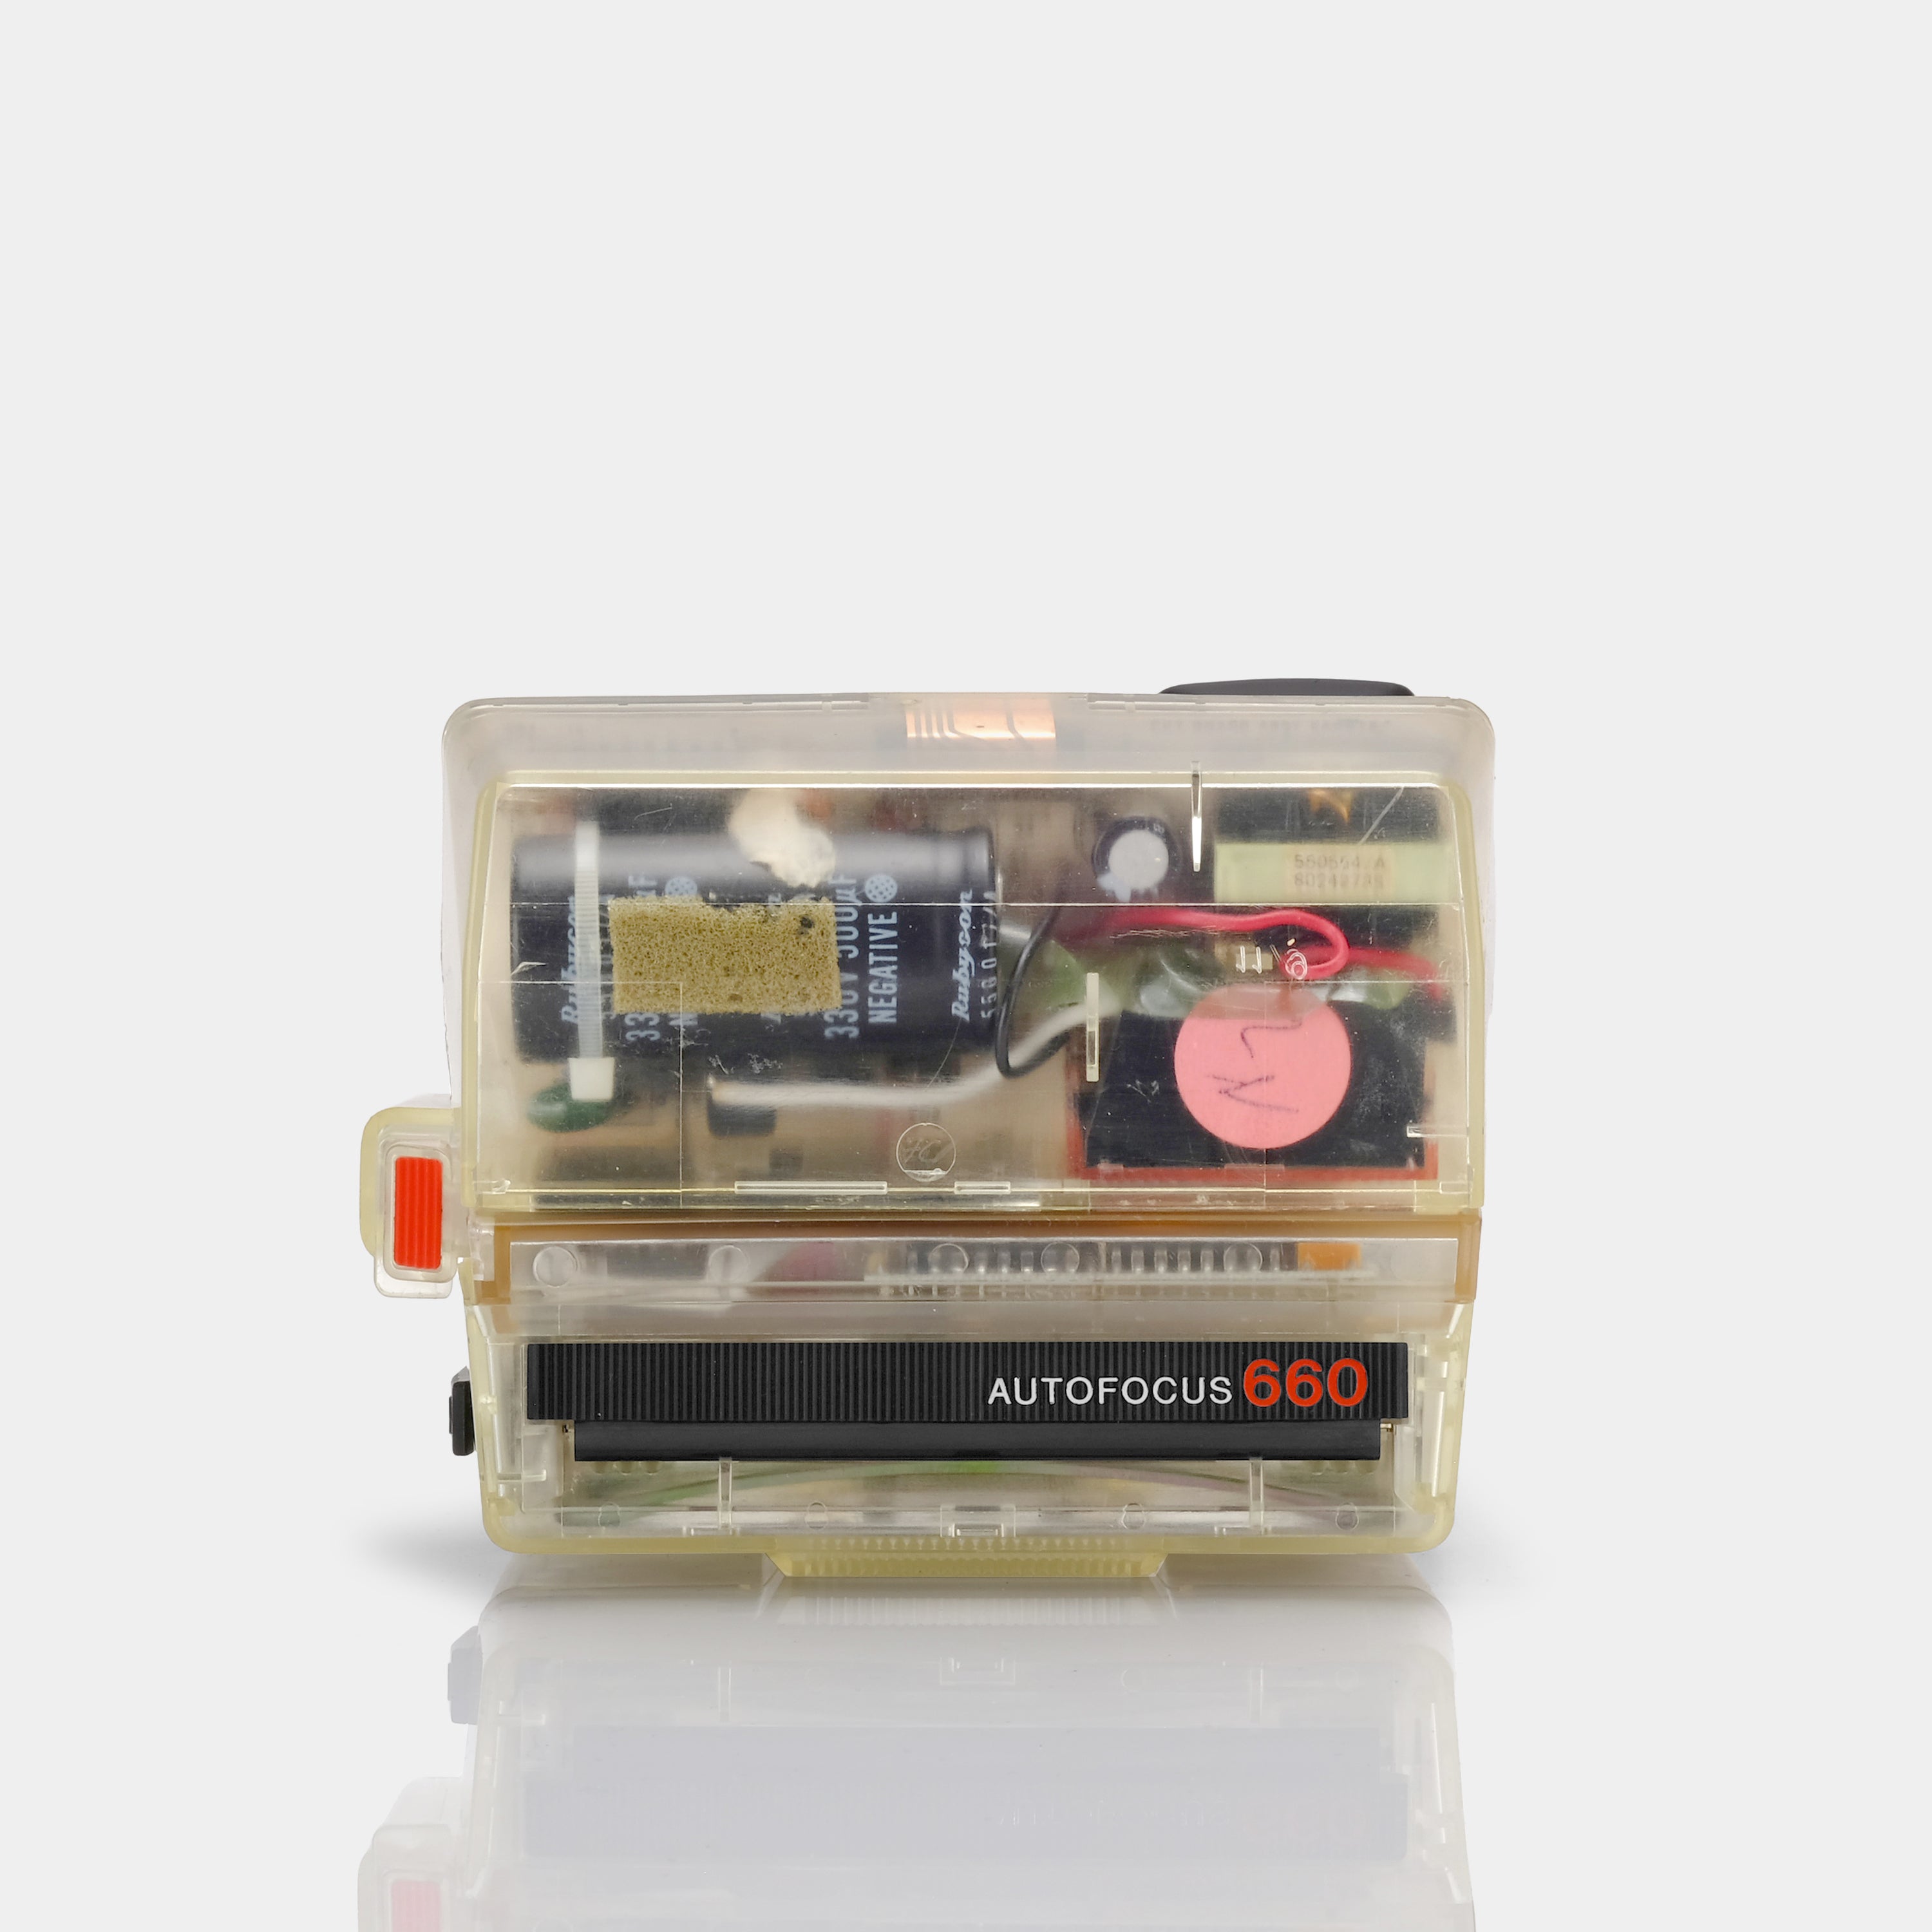 Polaroid Sun660 Transparent Clear Engineering Model Camera